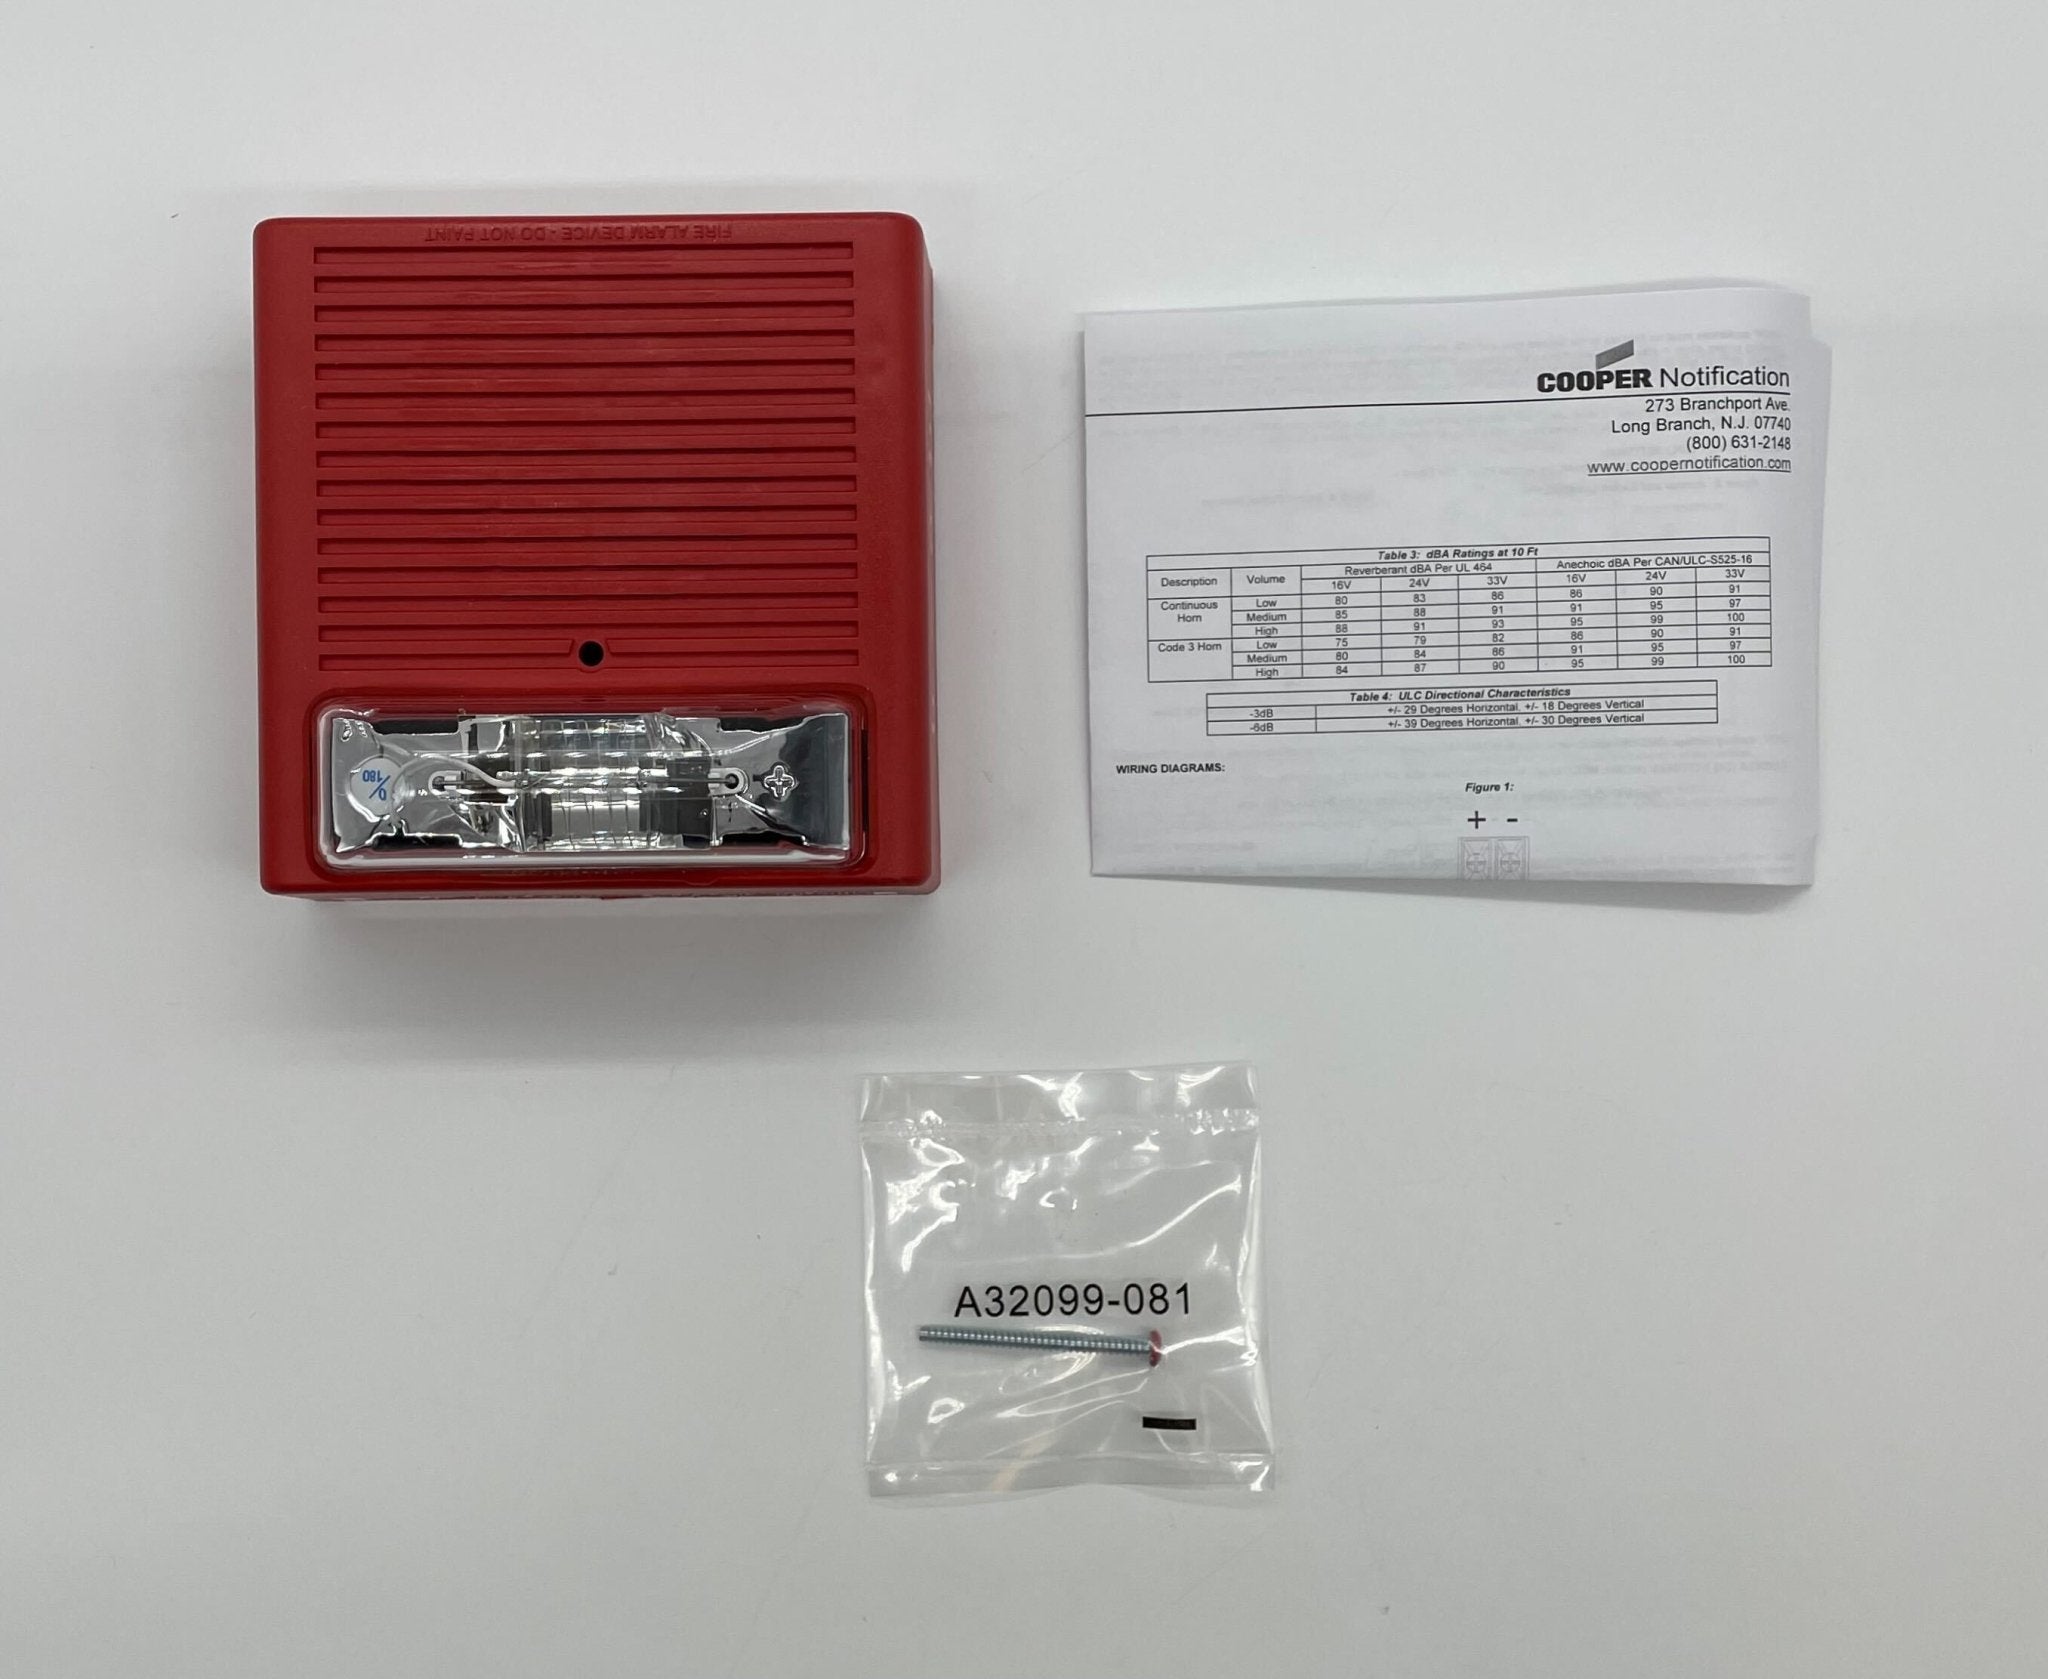 Wheelock ASWP-2475W-FR - The Fire Alarm Supplier